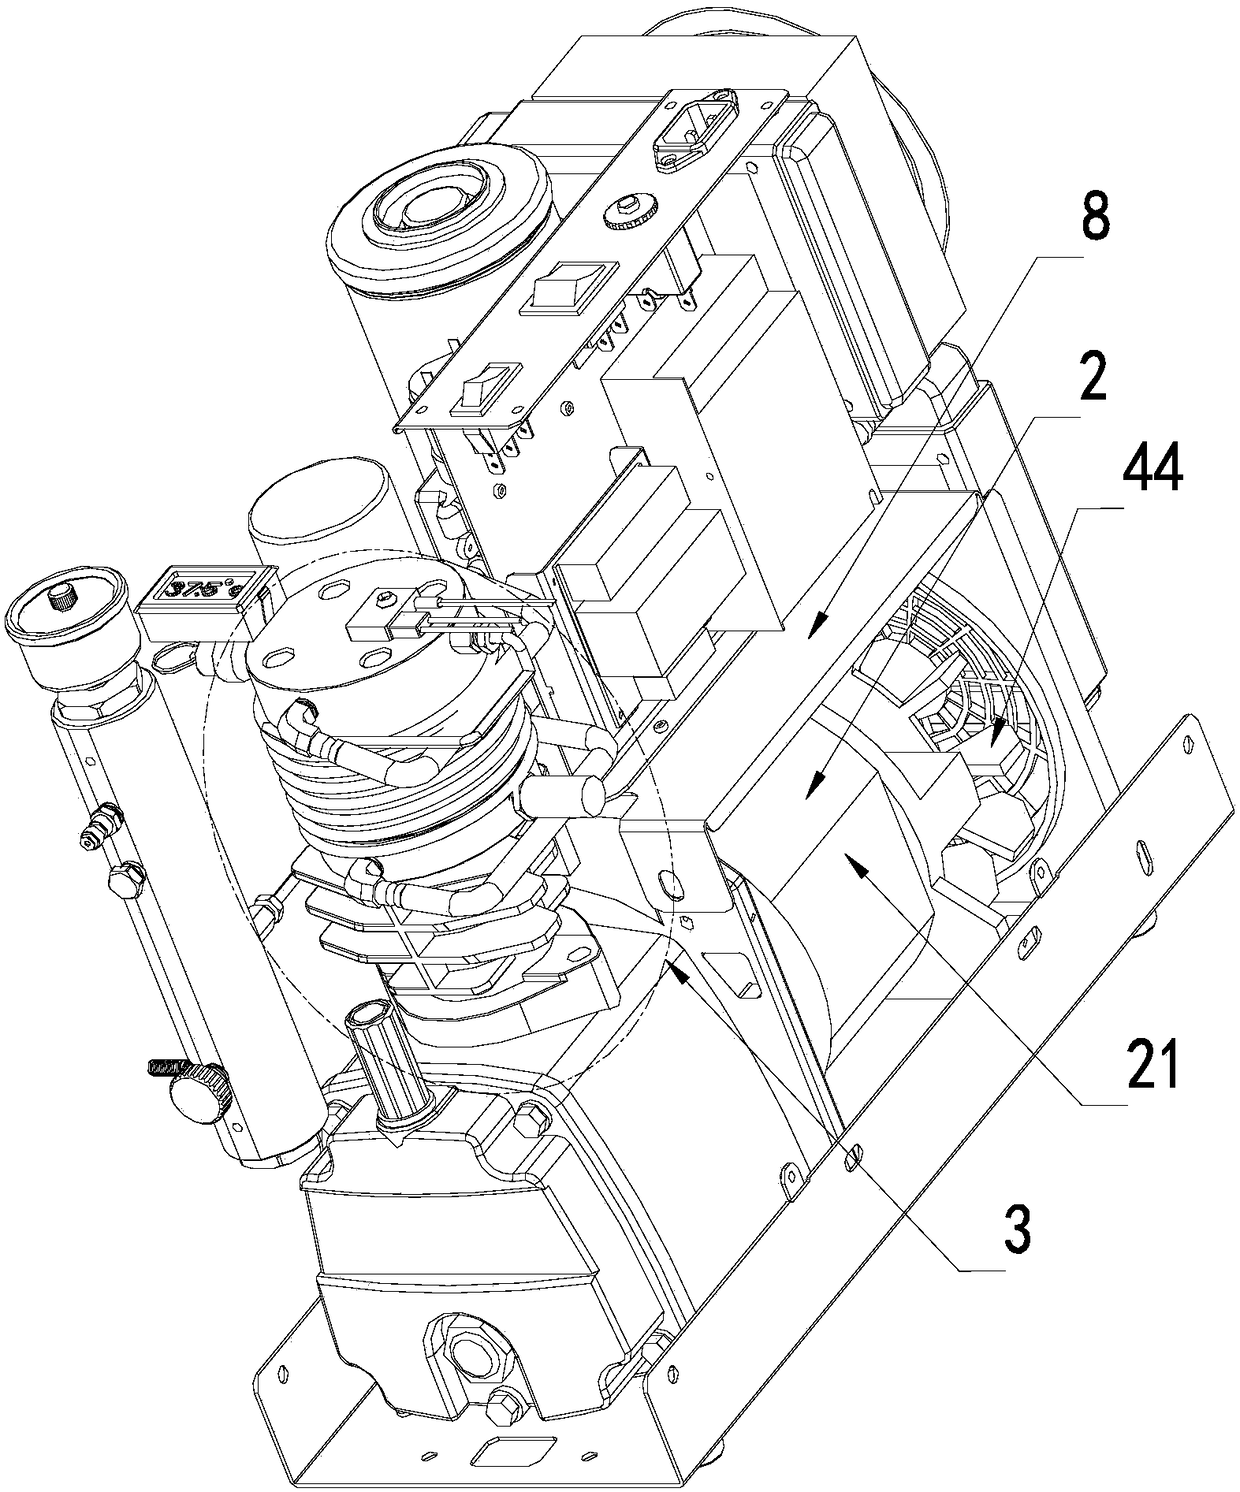 Single-cylinder high-pressure air compressor